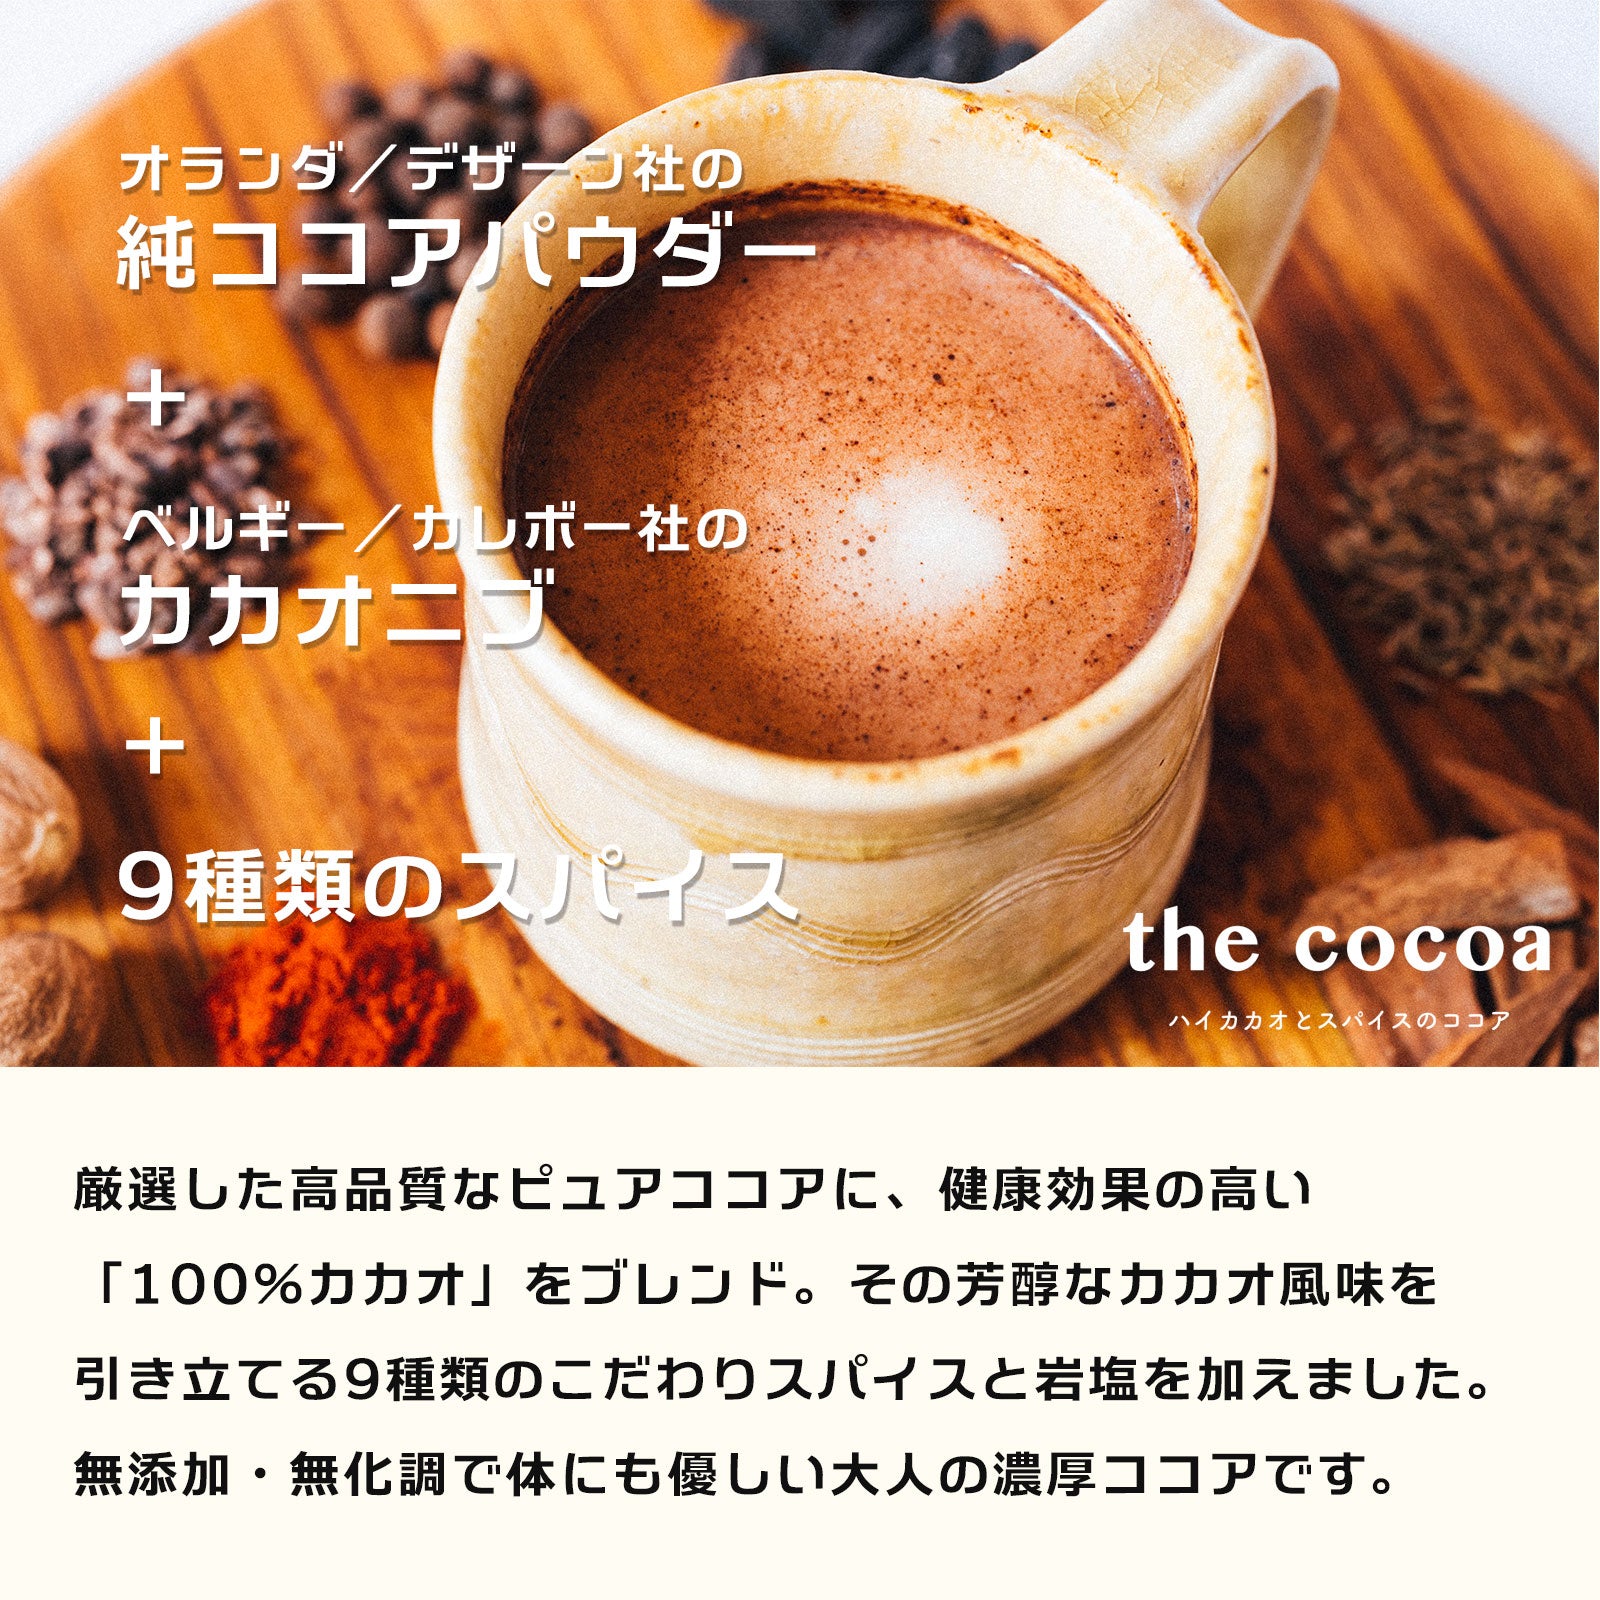 the cocoa／ハイカカオとスパイスのココア｜商品ページ｜INSPICE公式